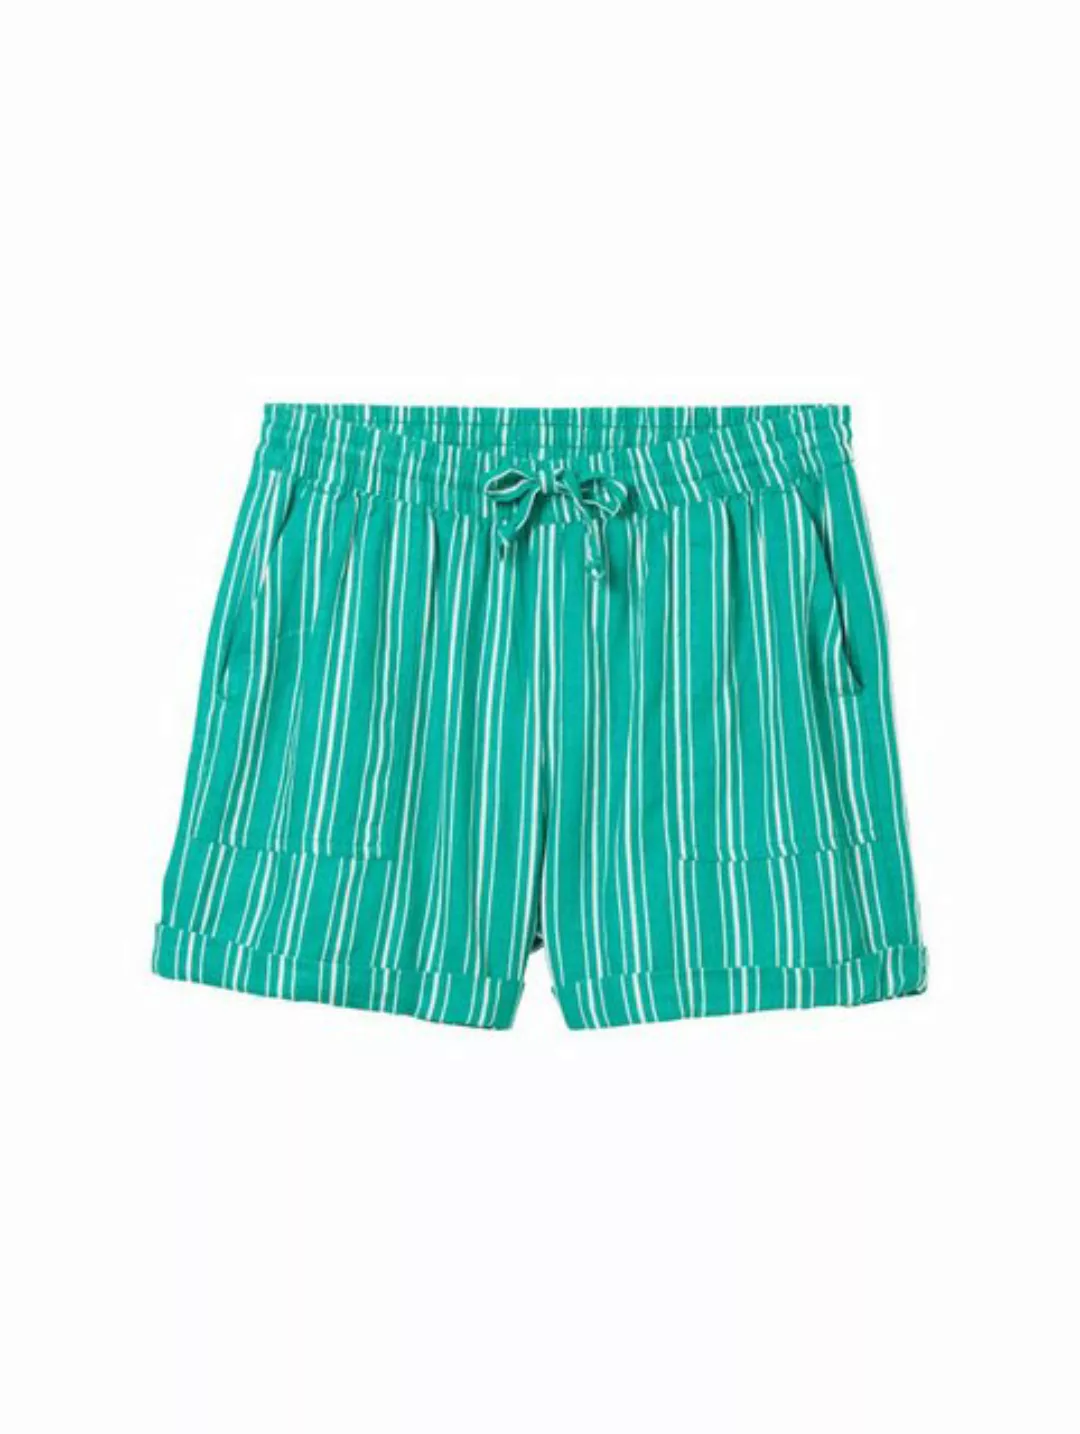 TOM TAILOR Denim Stoffhose easy linen shorts, green white vertical stripe günstig online kaufen